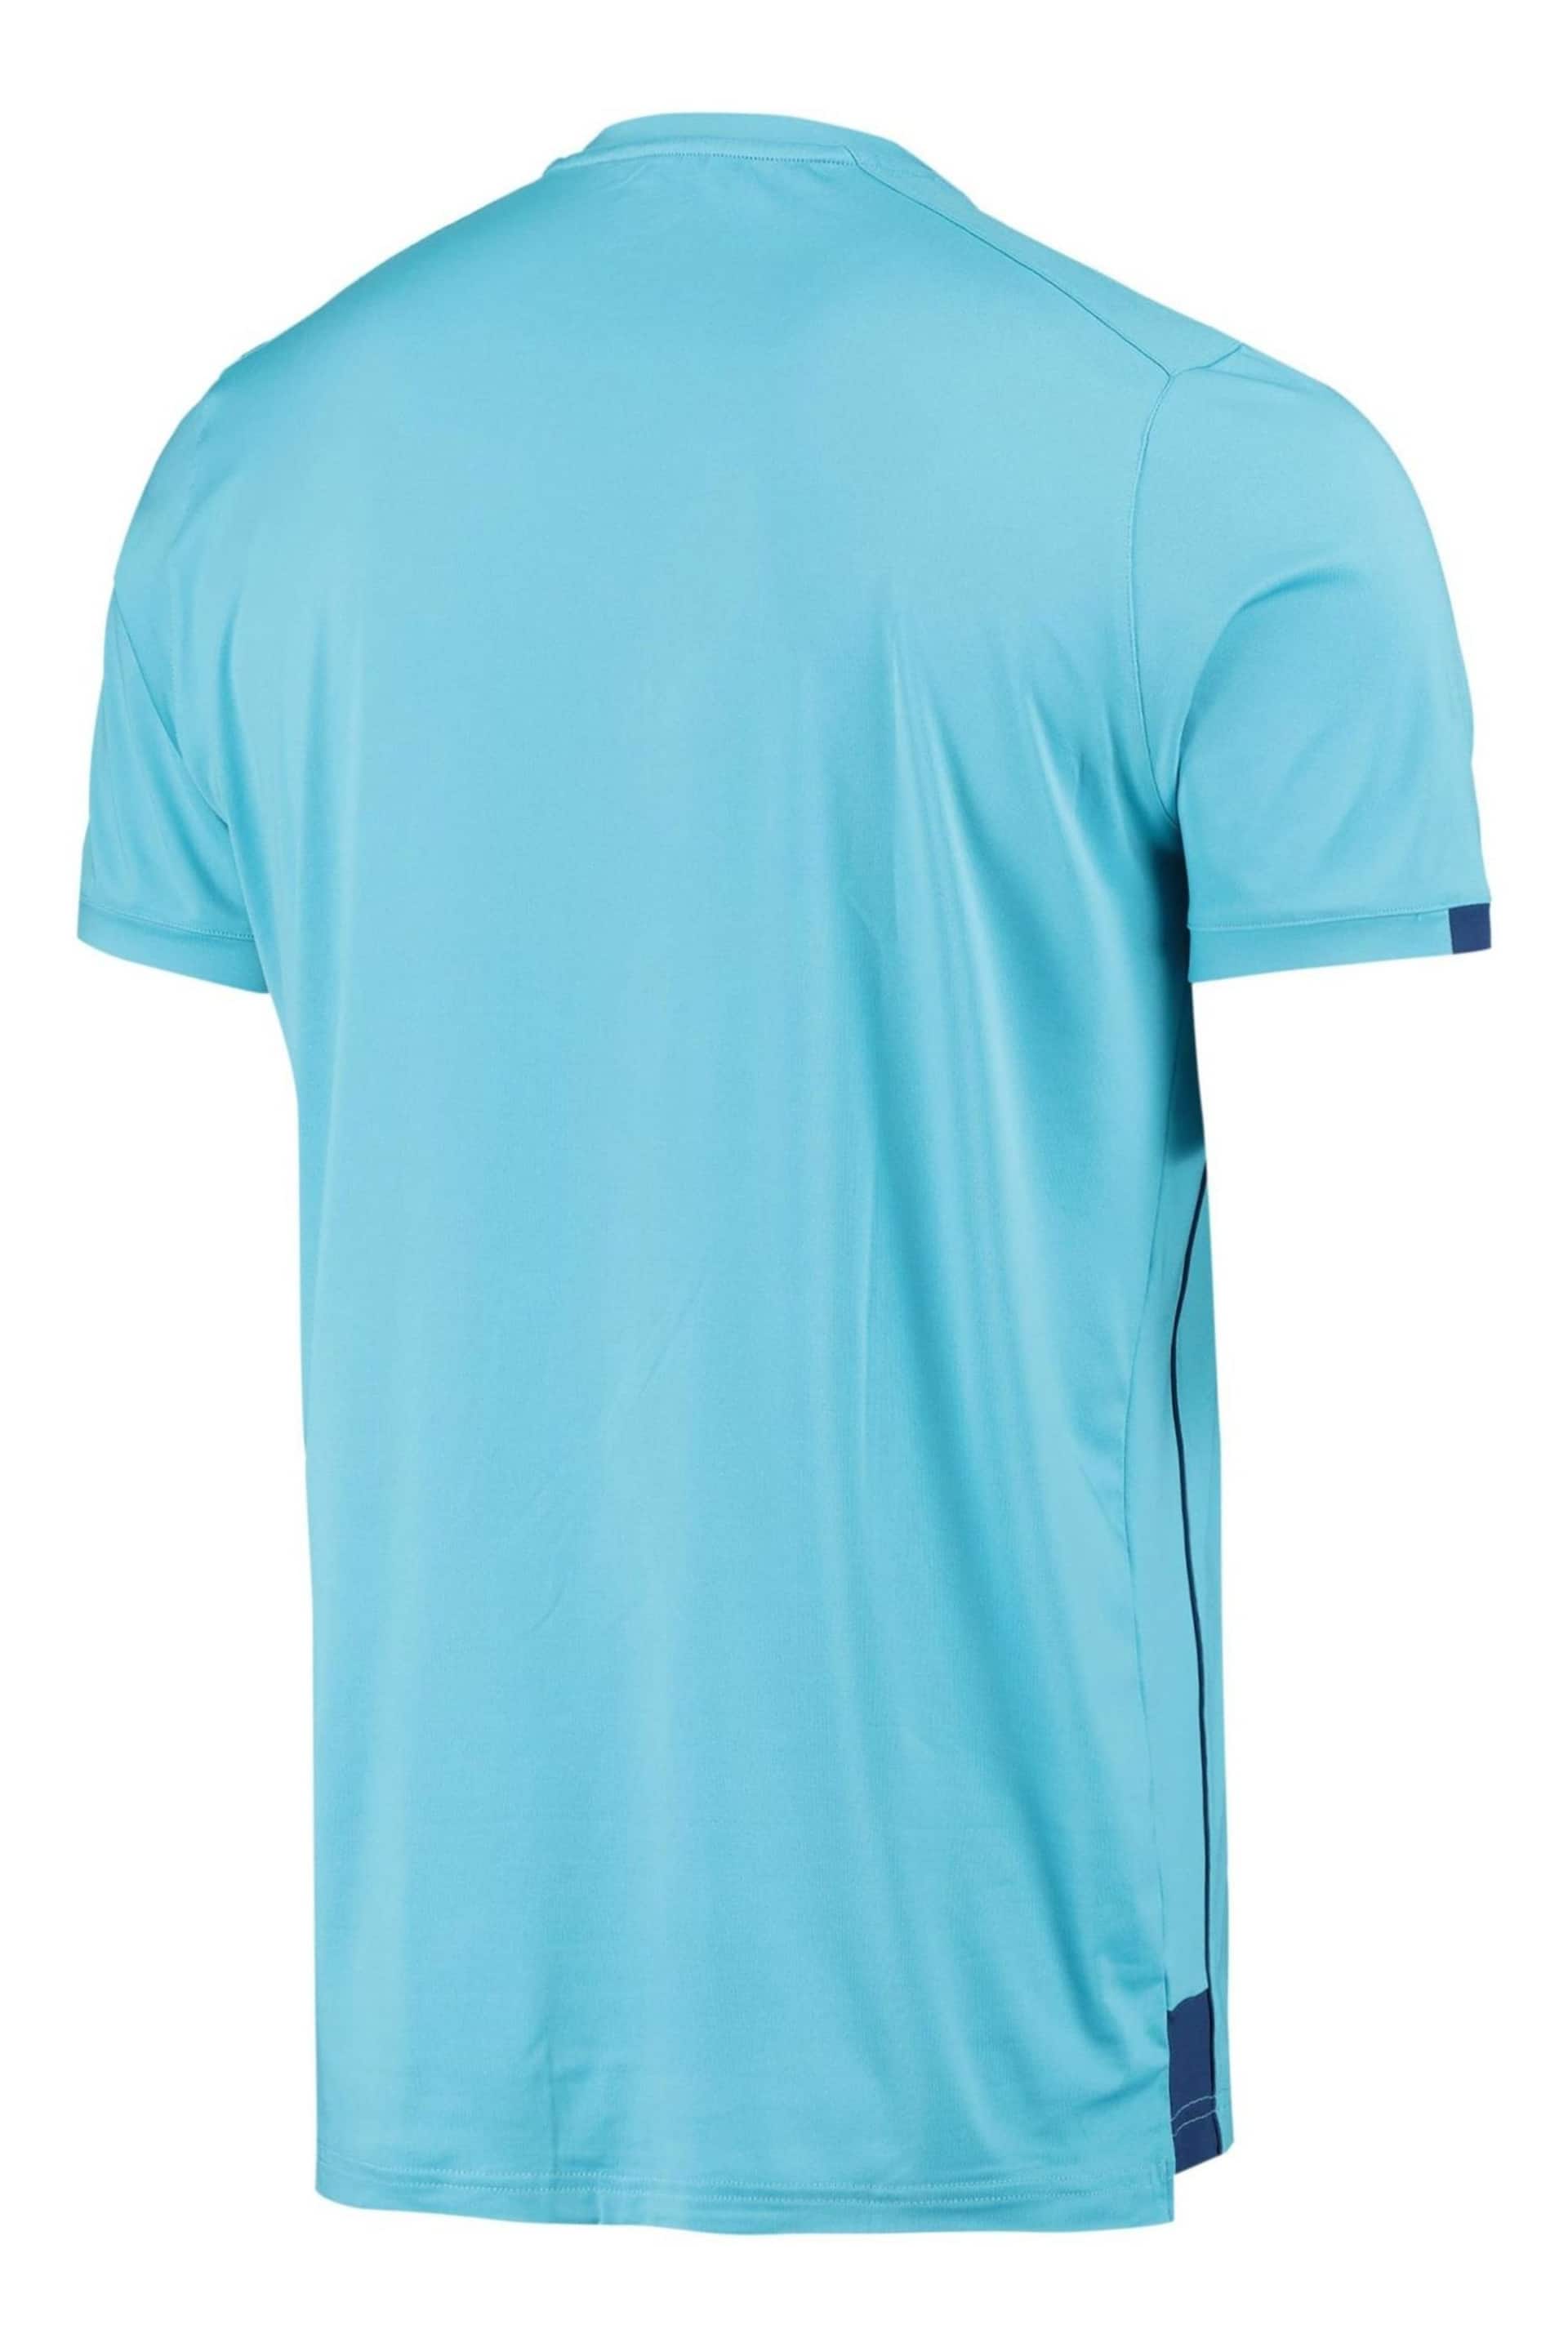 Castore Blue Newcastle United Staff Travel T-Shirt - Image 3 of 3